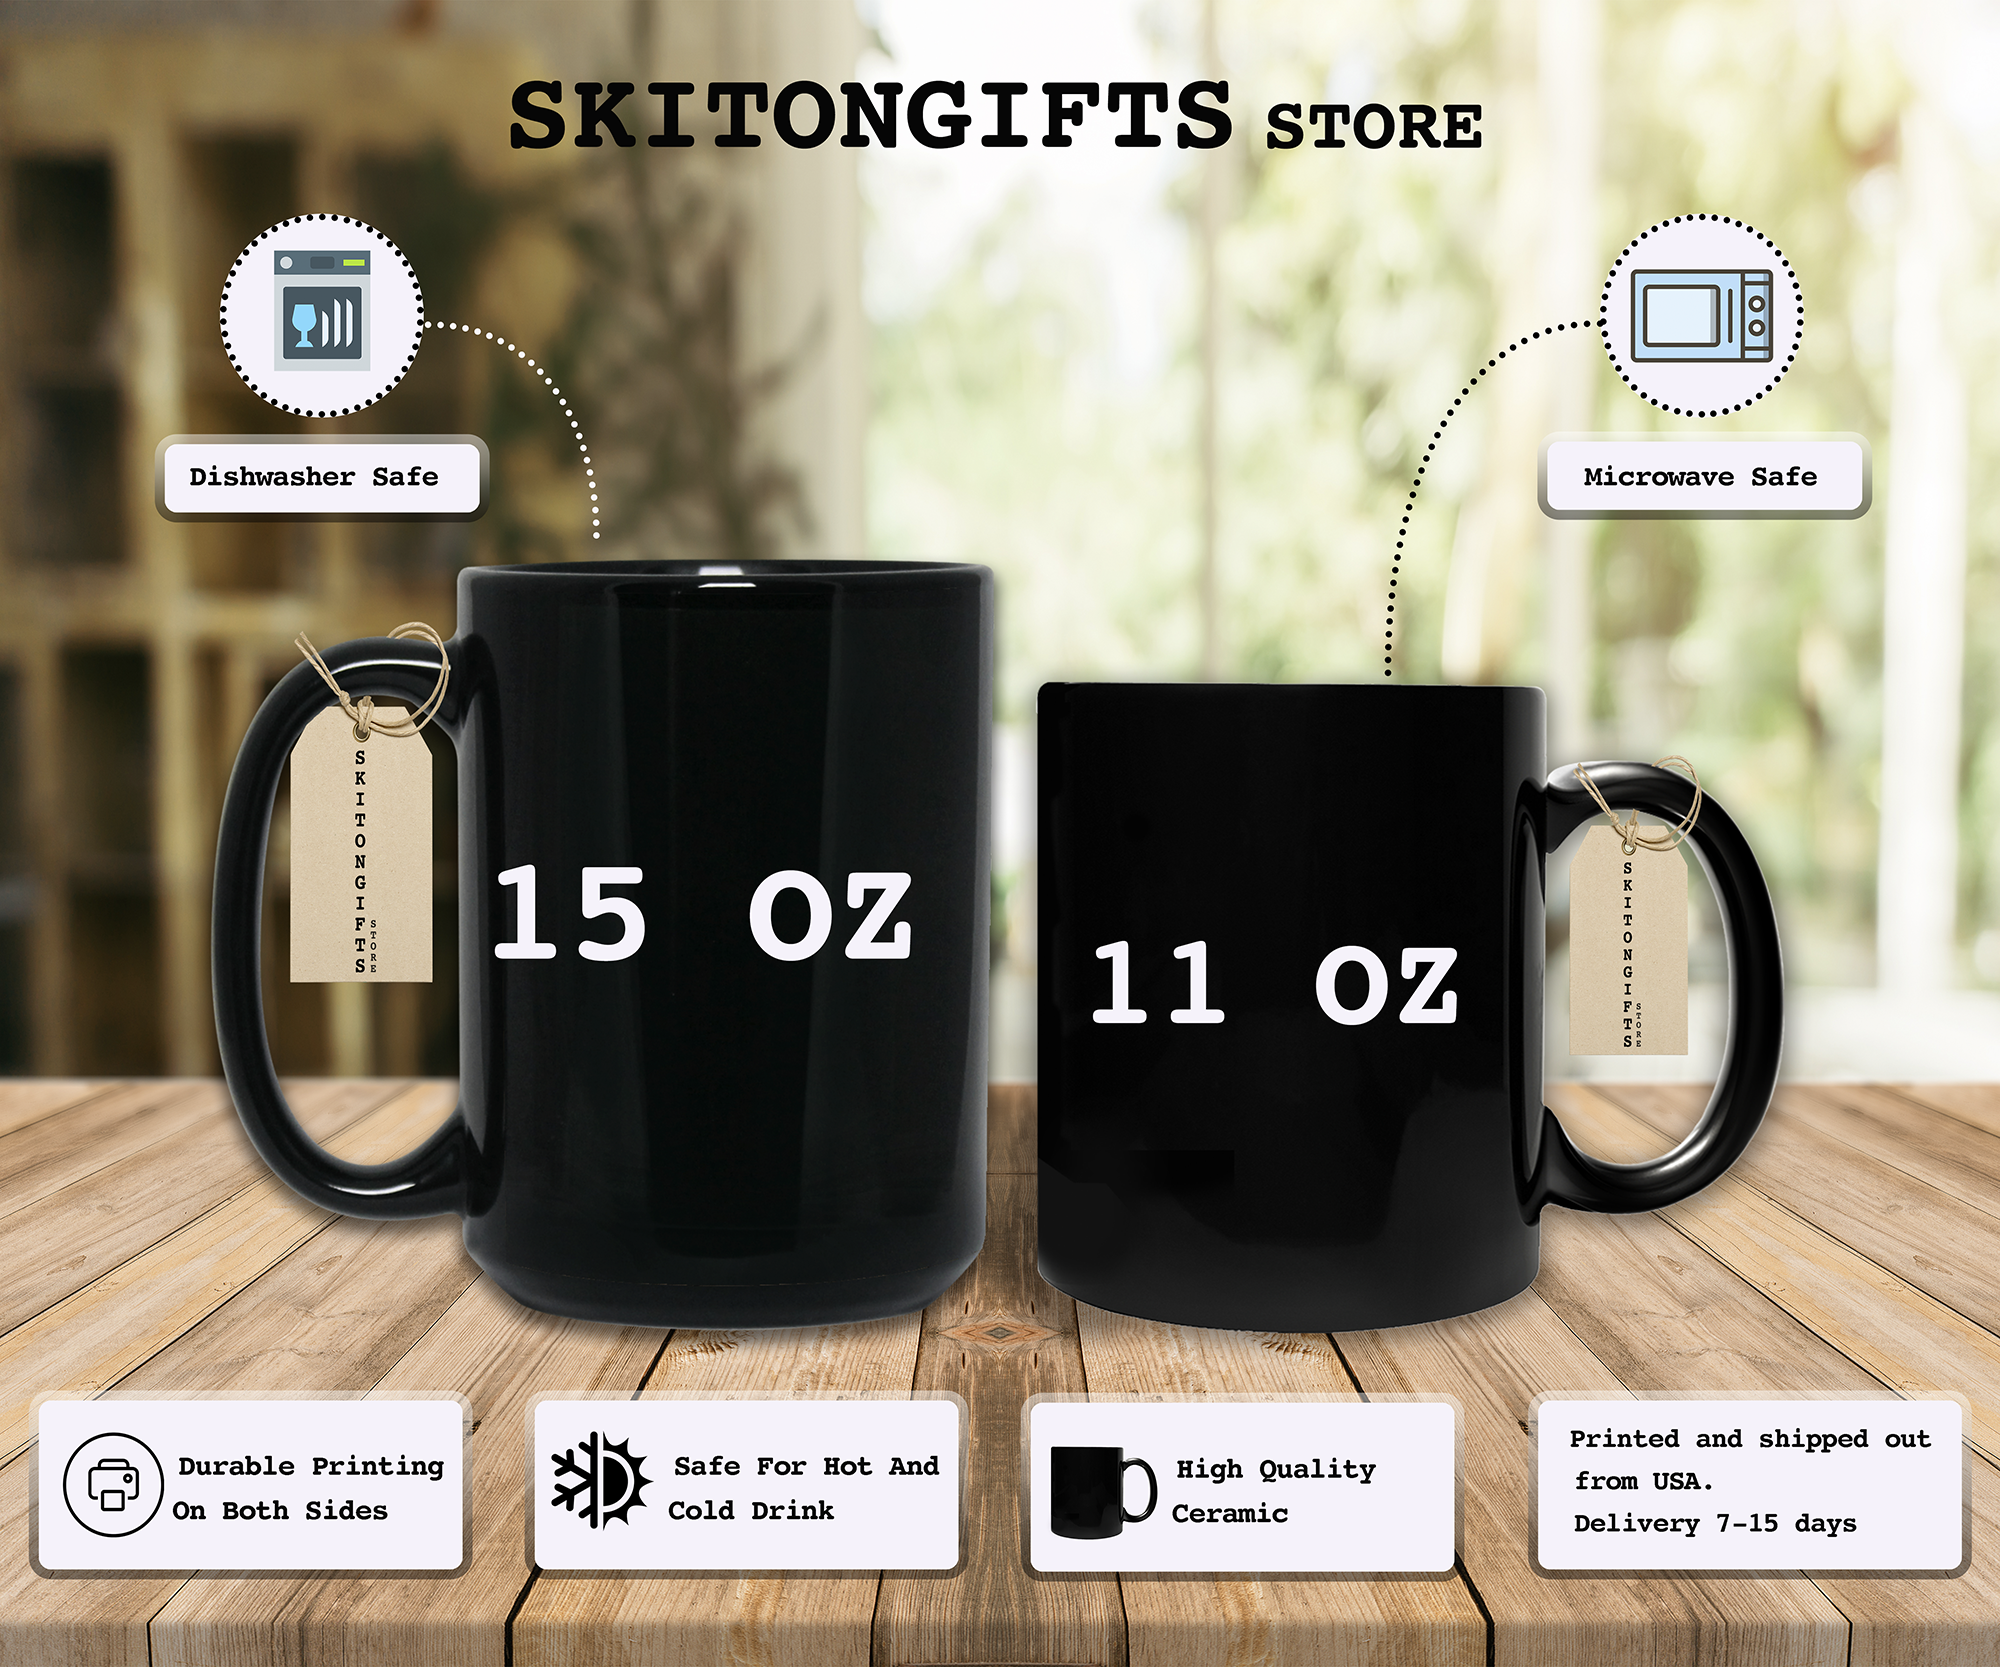 Skitongifts Funny Ceramic Novelty Coffee Mug You Call Them Swear Words. I Call Them Sentence Enhancers. F - XzFBldV